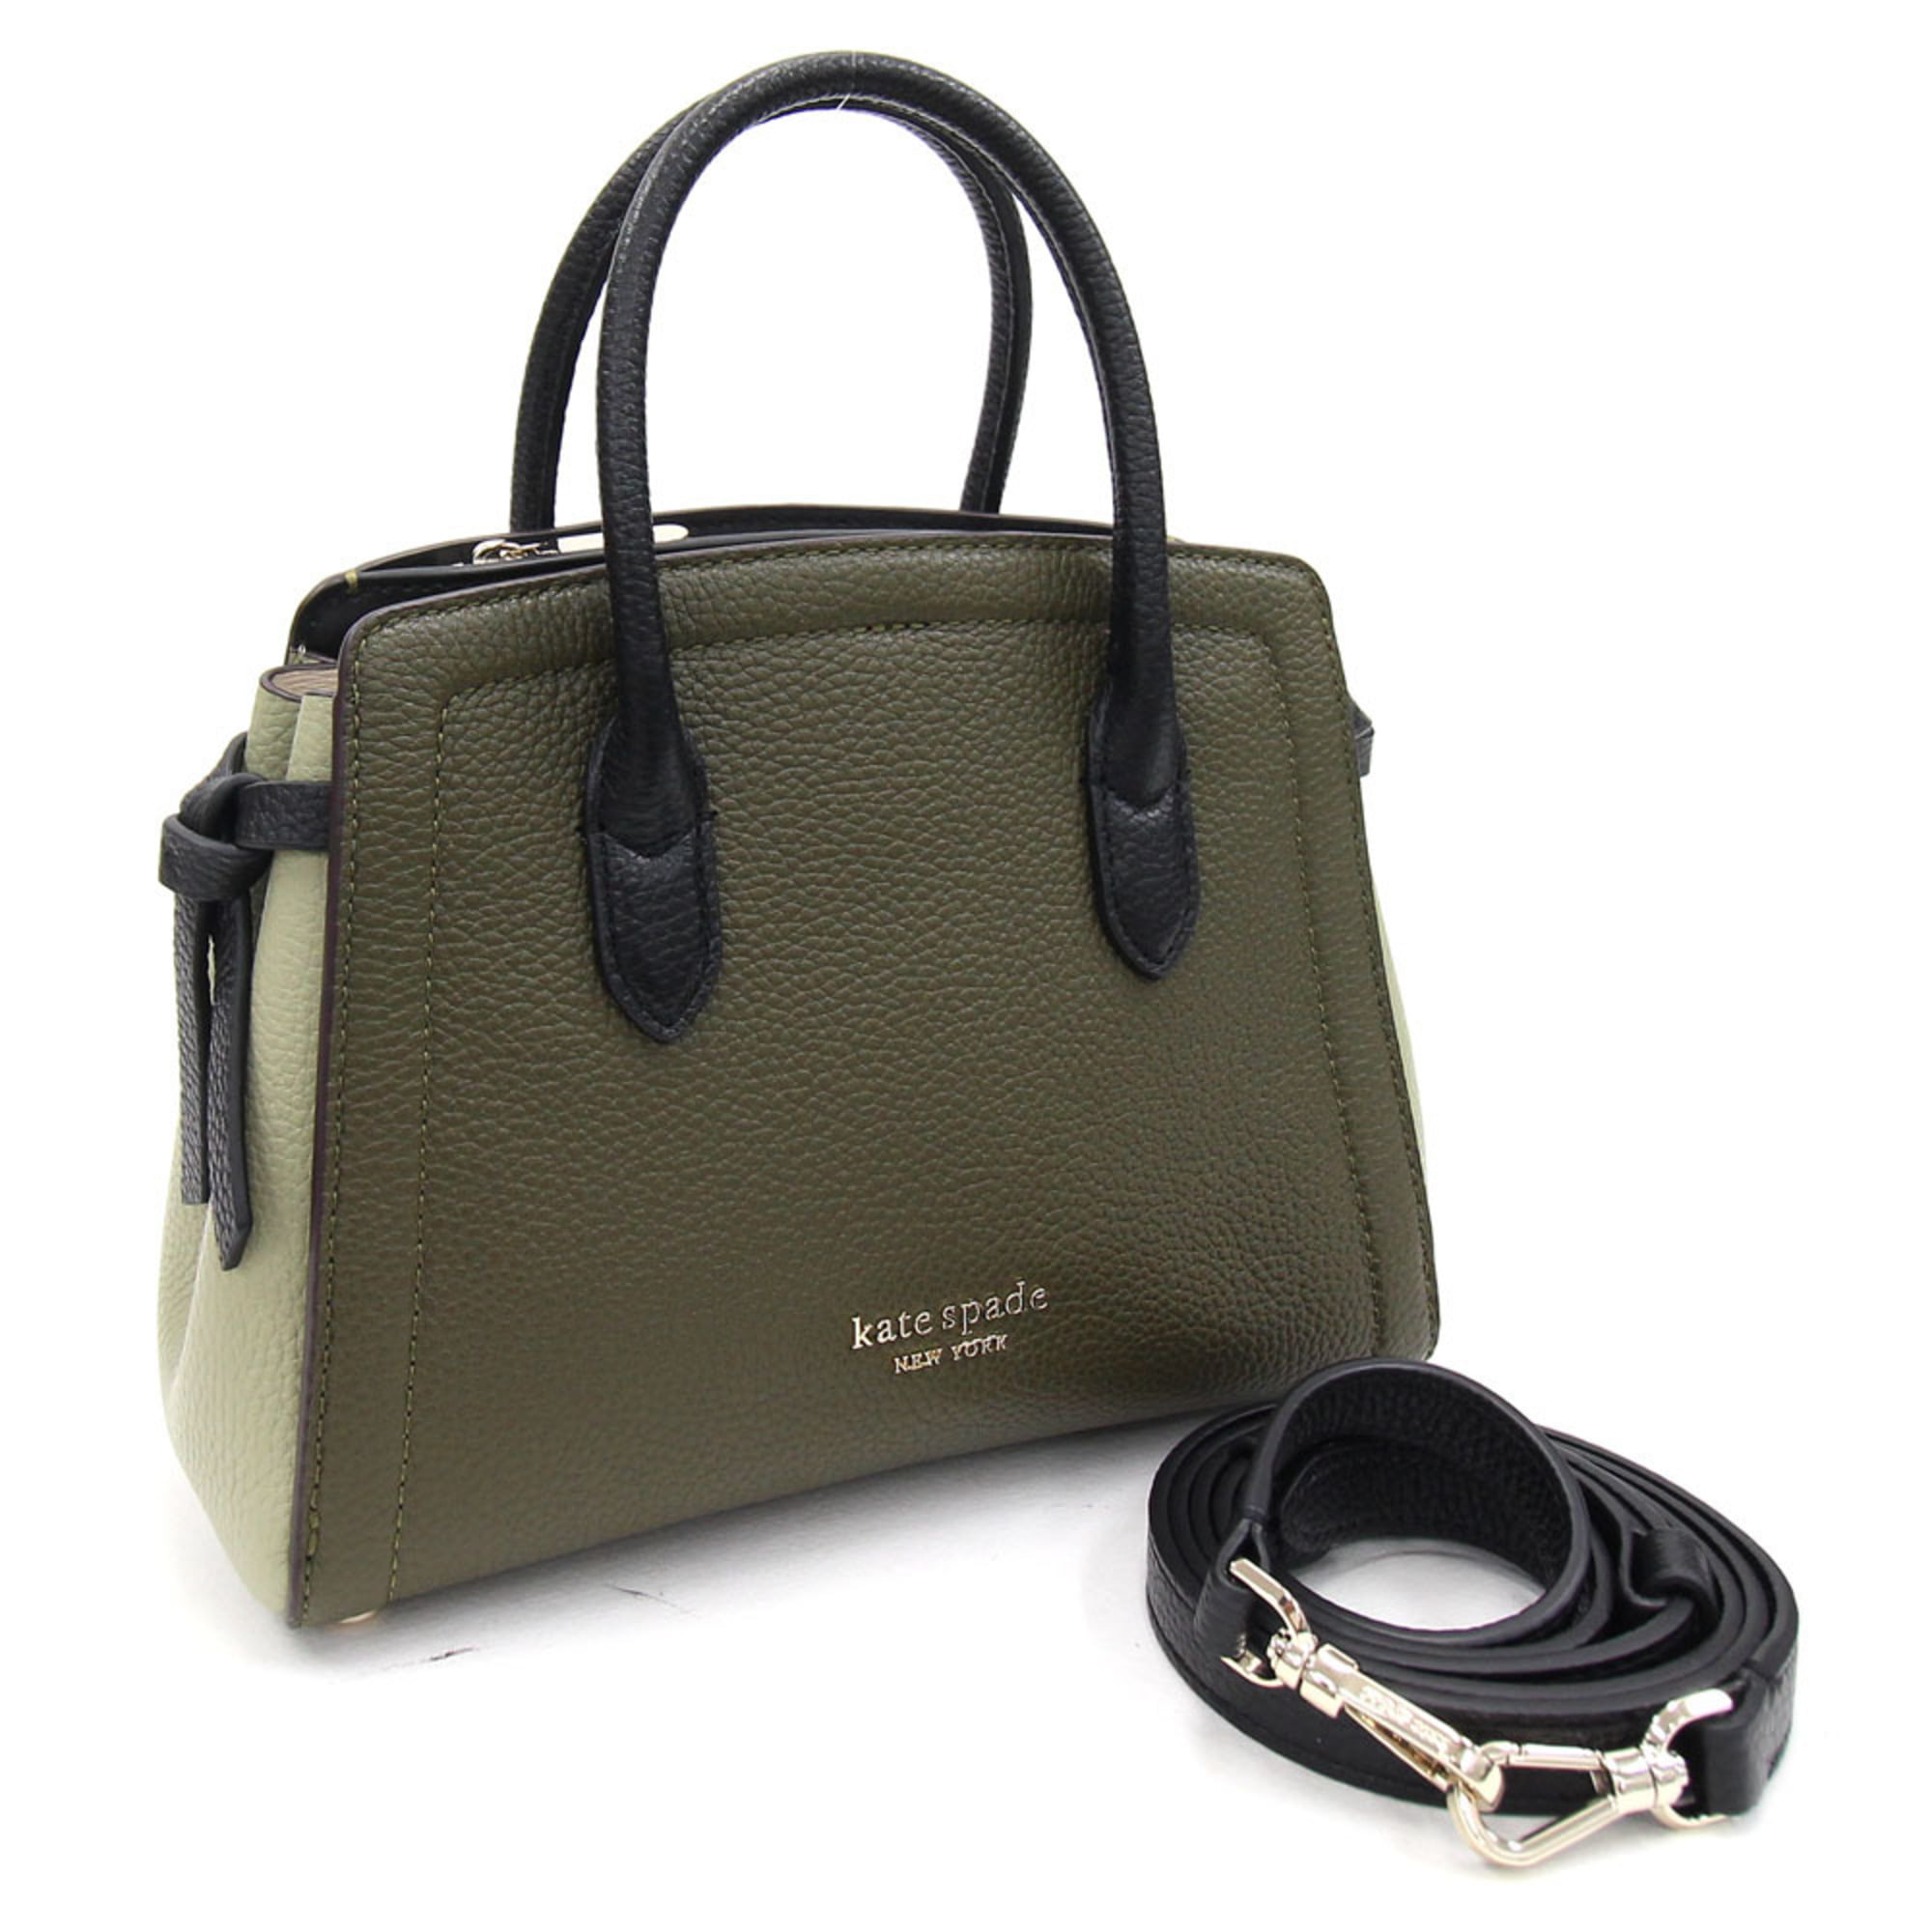 Authenticated Used Kate Spade Handbag Knot Color Block Mini Satchel K4381  Dark Green Black Leather Shoulder Bag Tote Ladies Crossbody kate spade -  